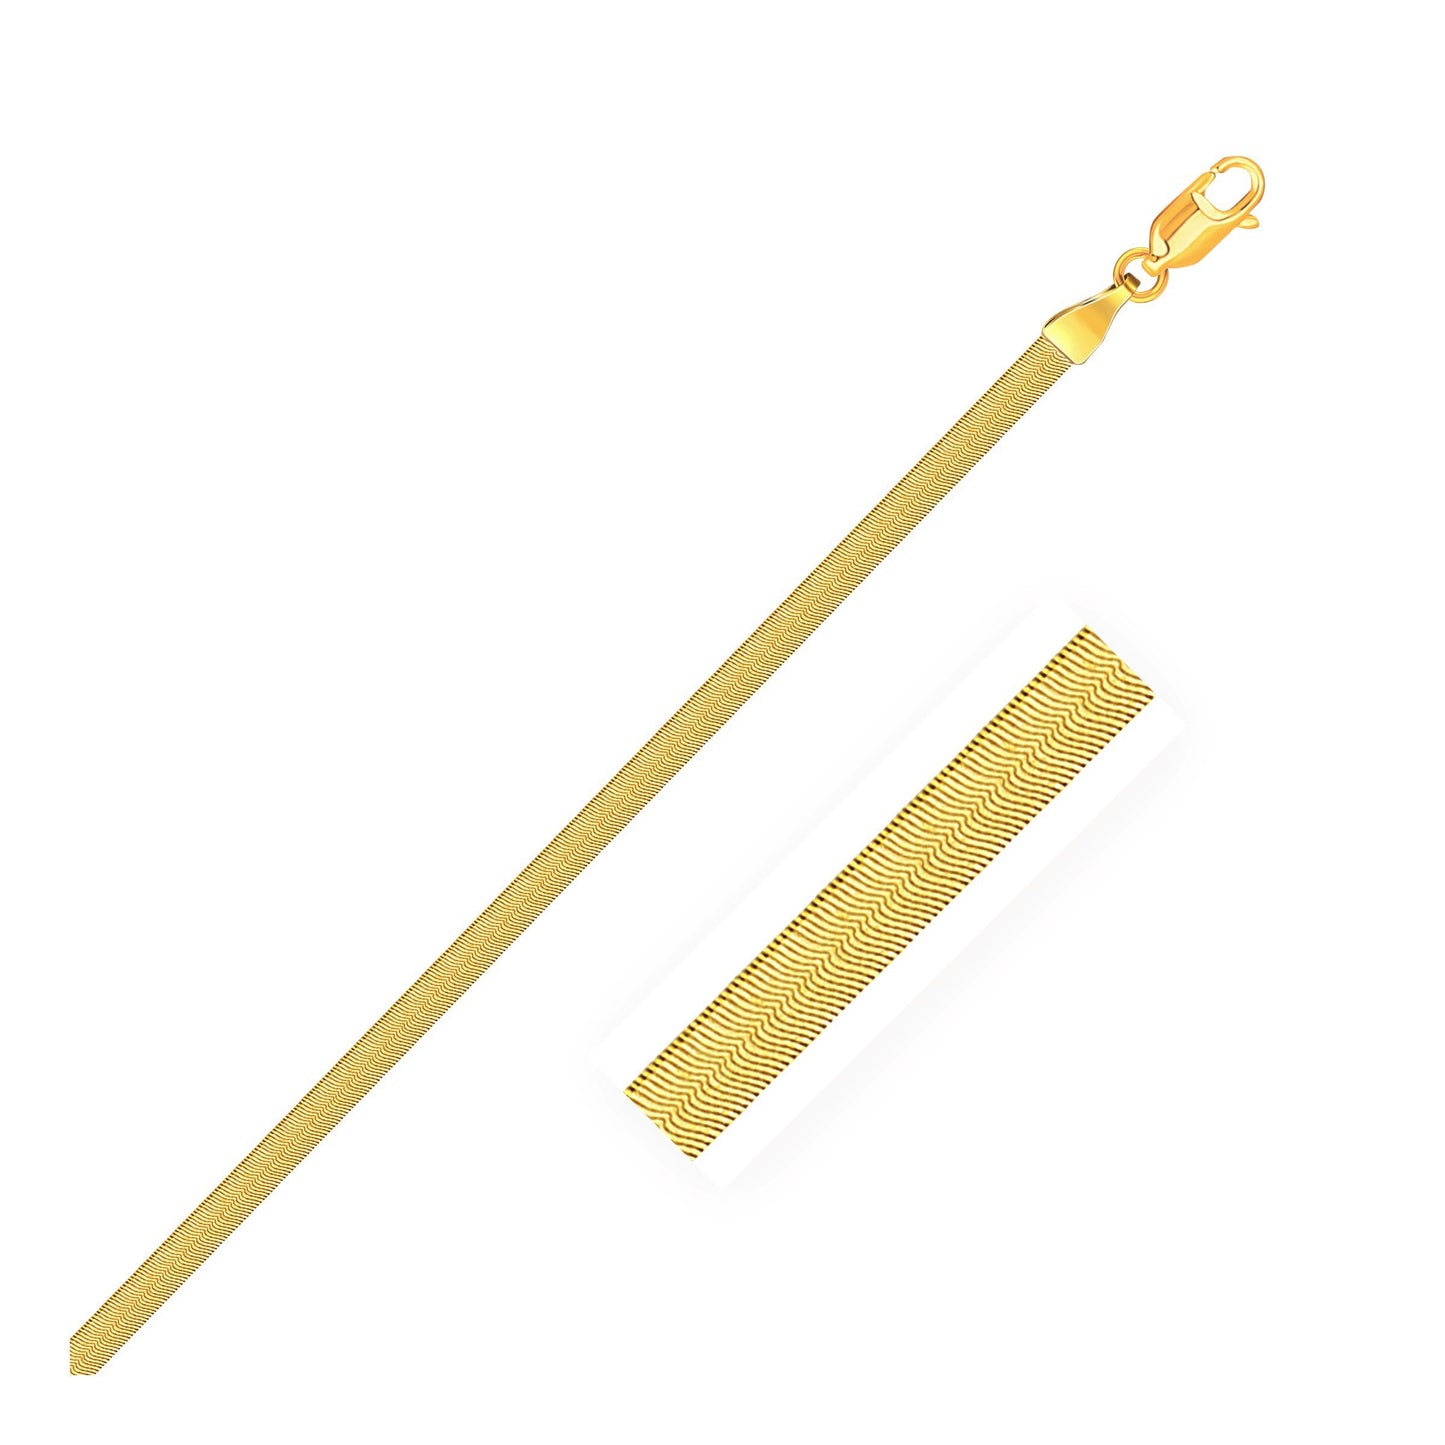 Imperial Herringbone Bracelet in 10k Yellow Gold (2.8 mm)